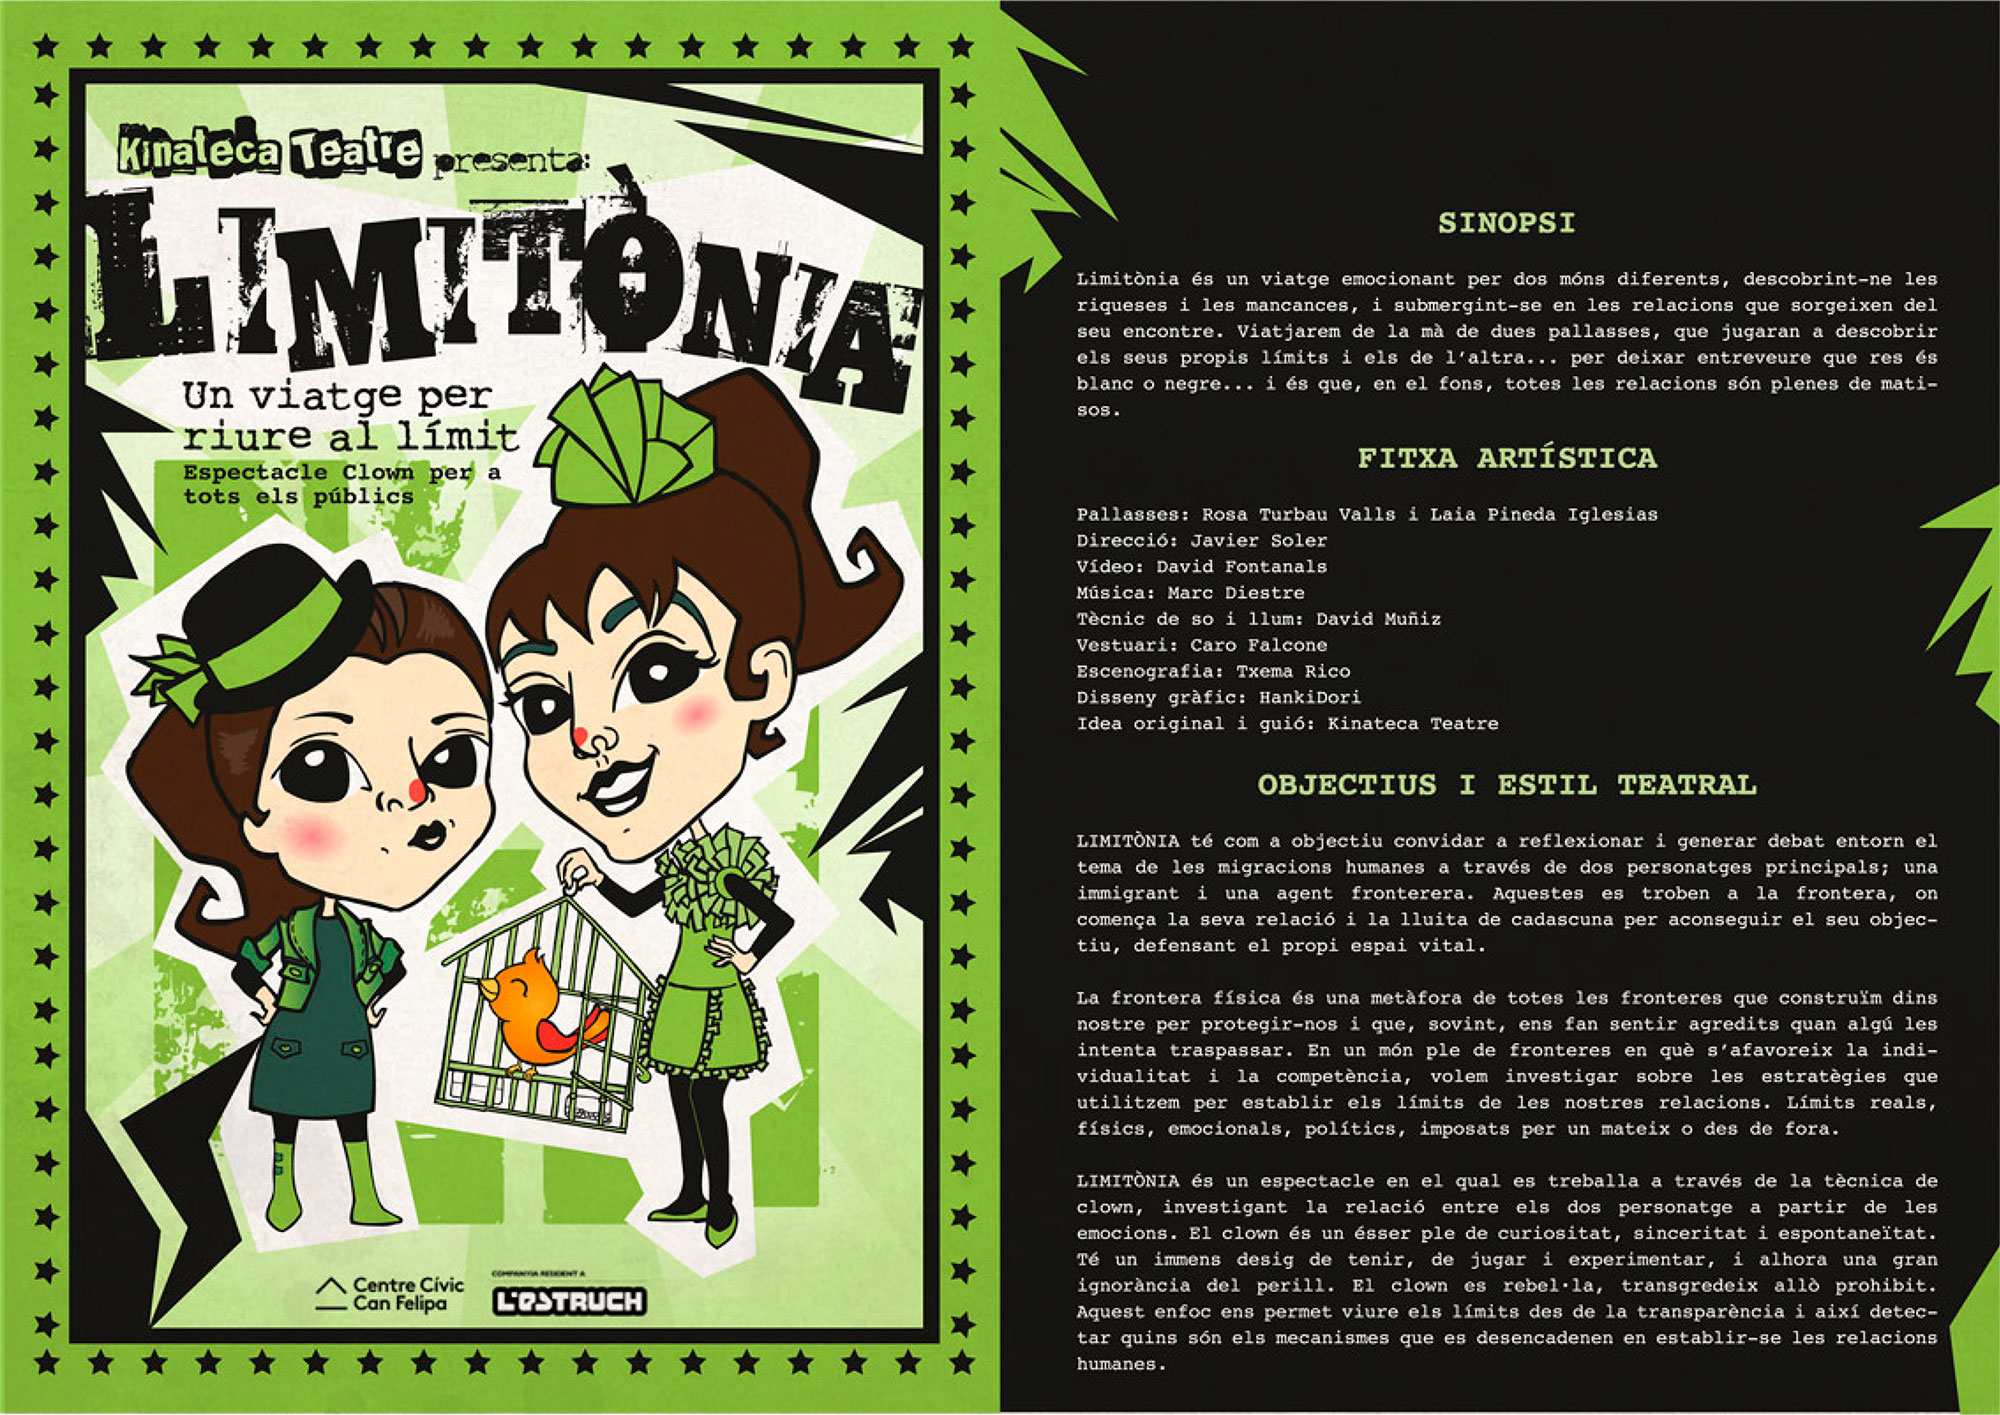 limitonia-prj-content-flyer1